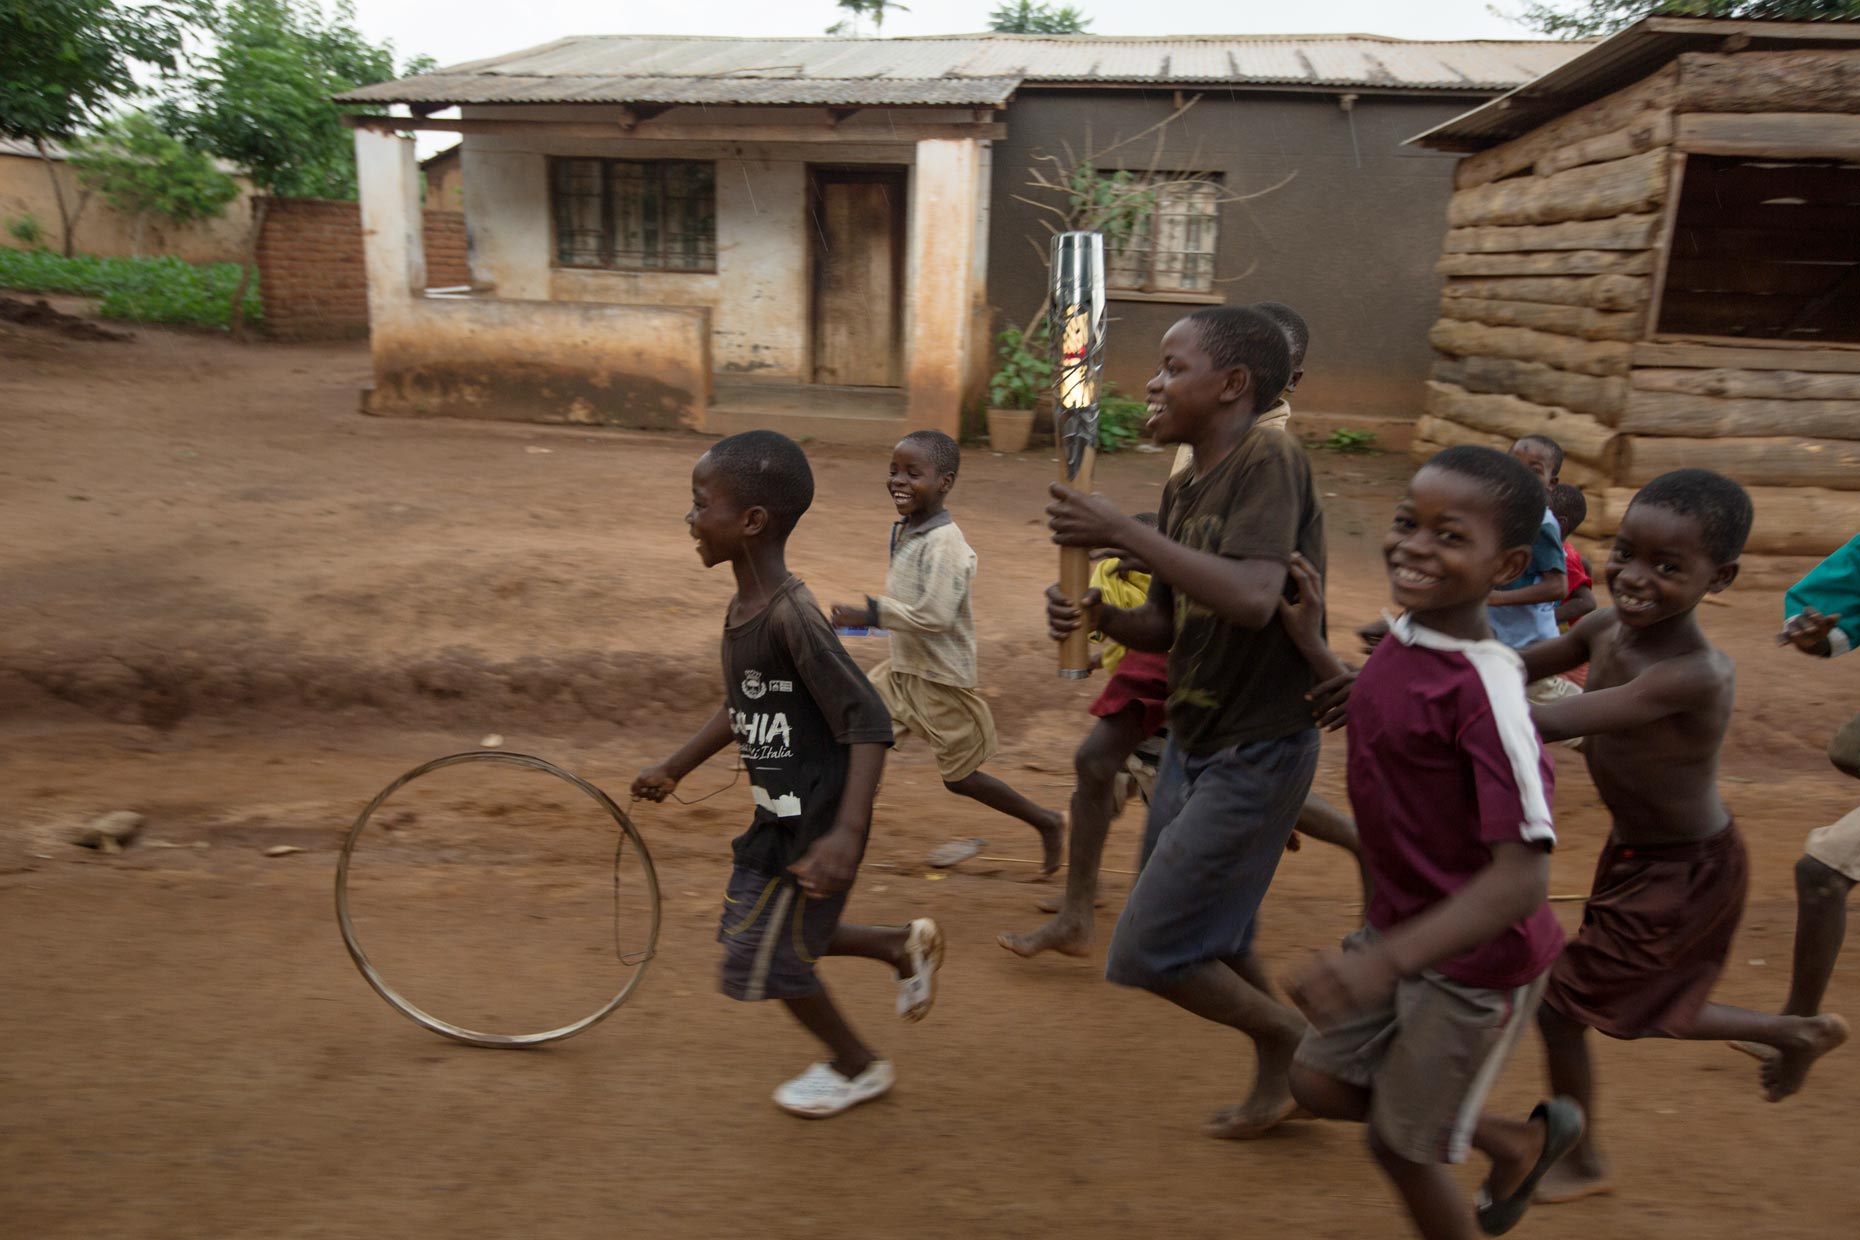 Malawi children with Queen